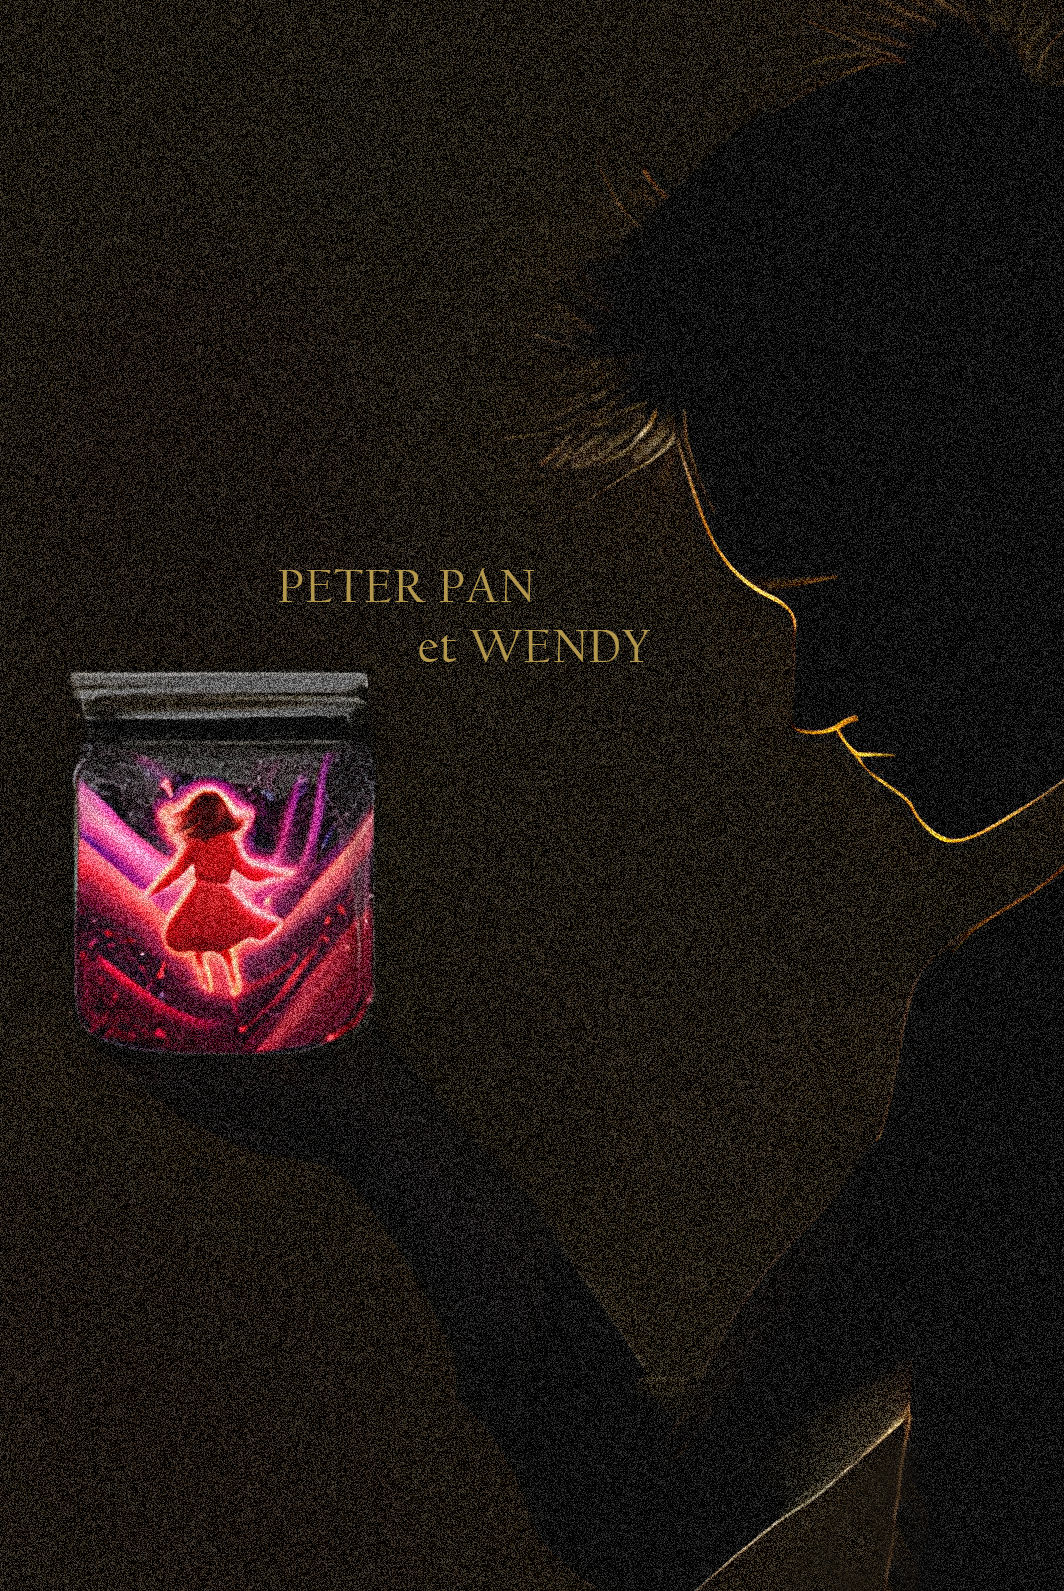 PETER PAN ET WENDY titre.jpg